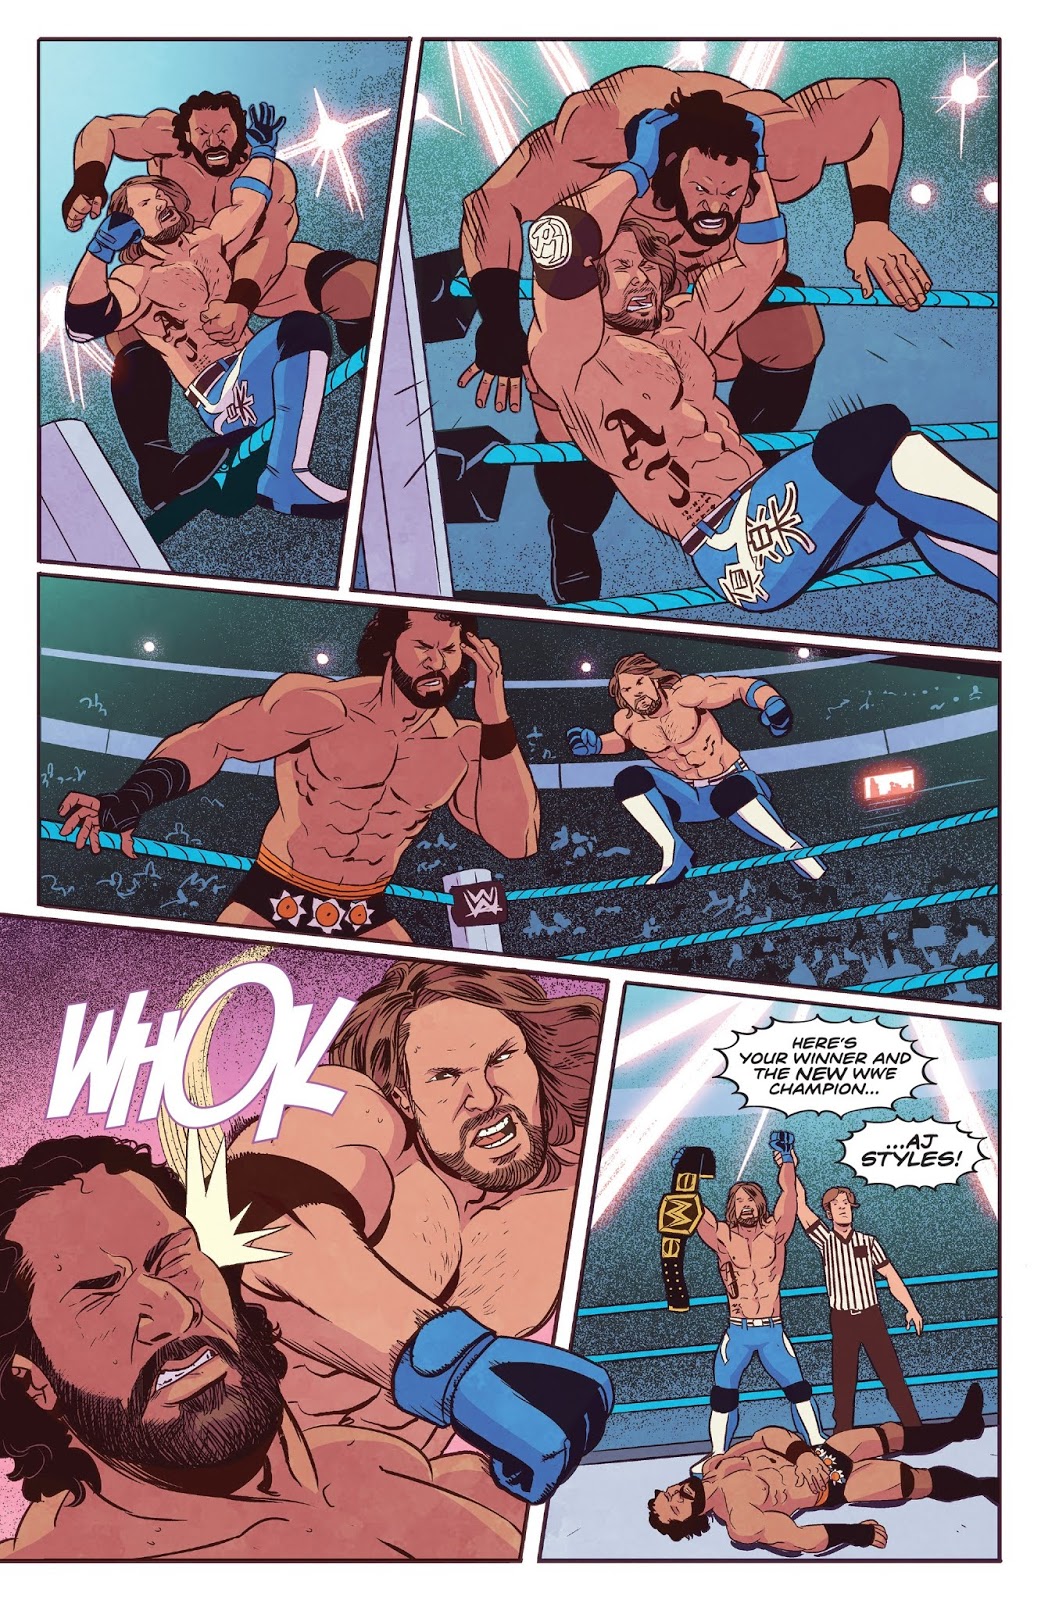 AJ Styles VS Brock Lesnar (Survivor Series 2017) 